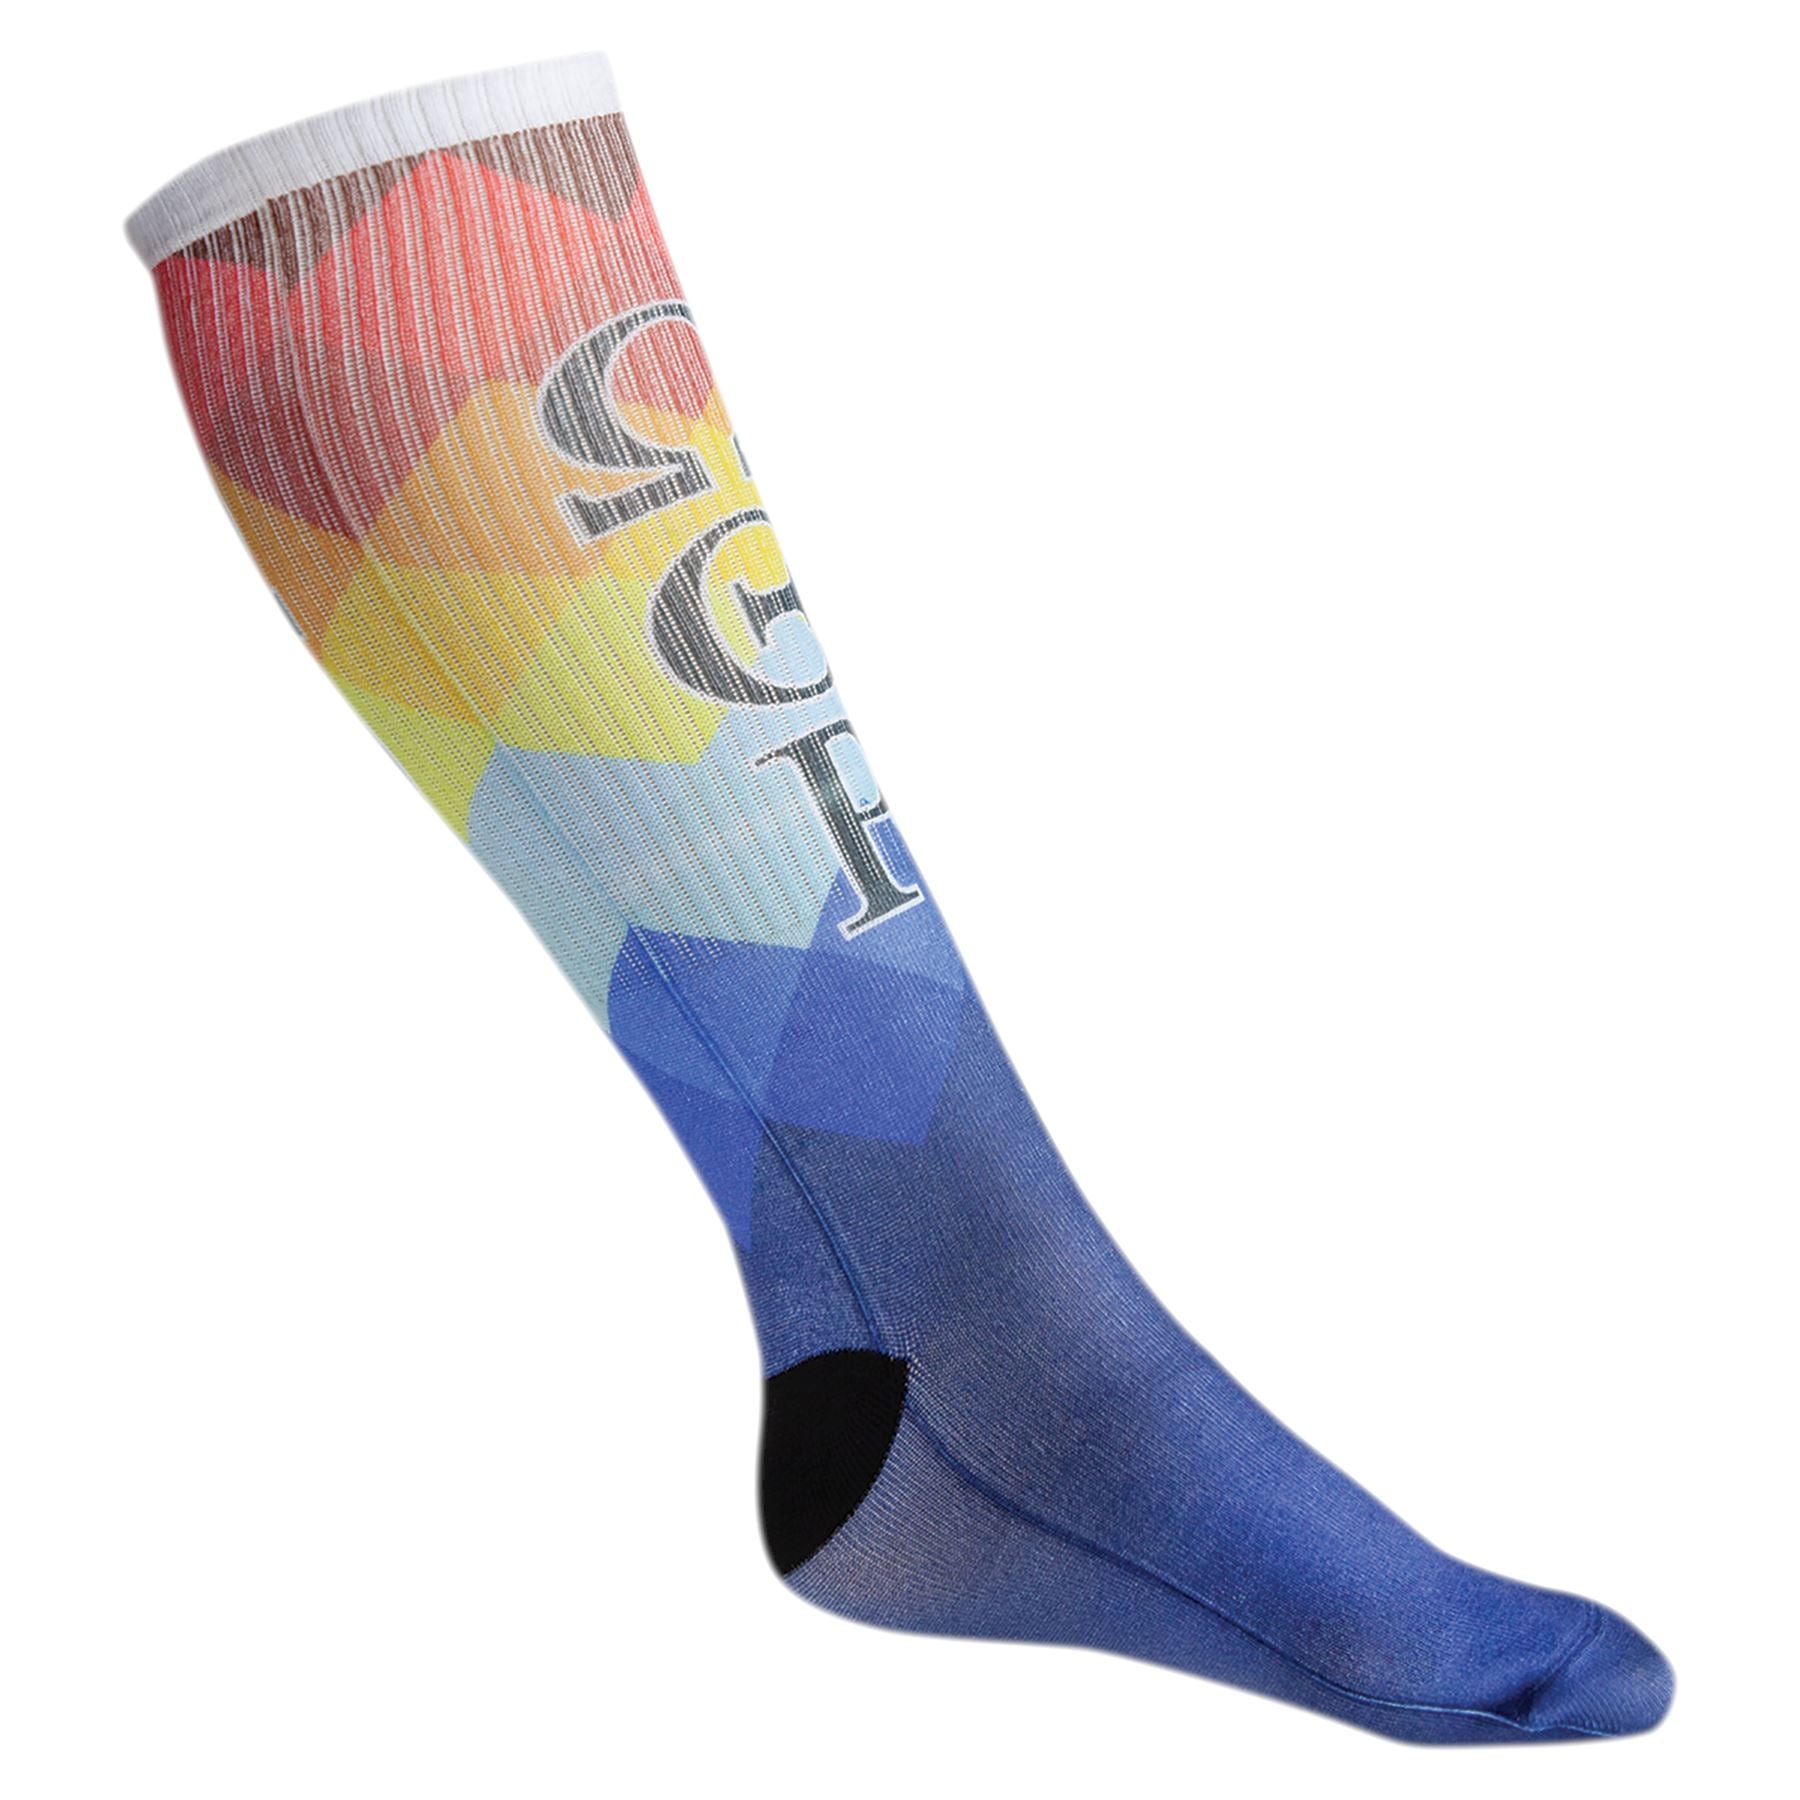 Unisex Adult Athletic Socks (1 Pair), Full Color Dye Sub Socks Craftworks NW 